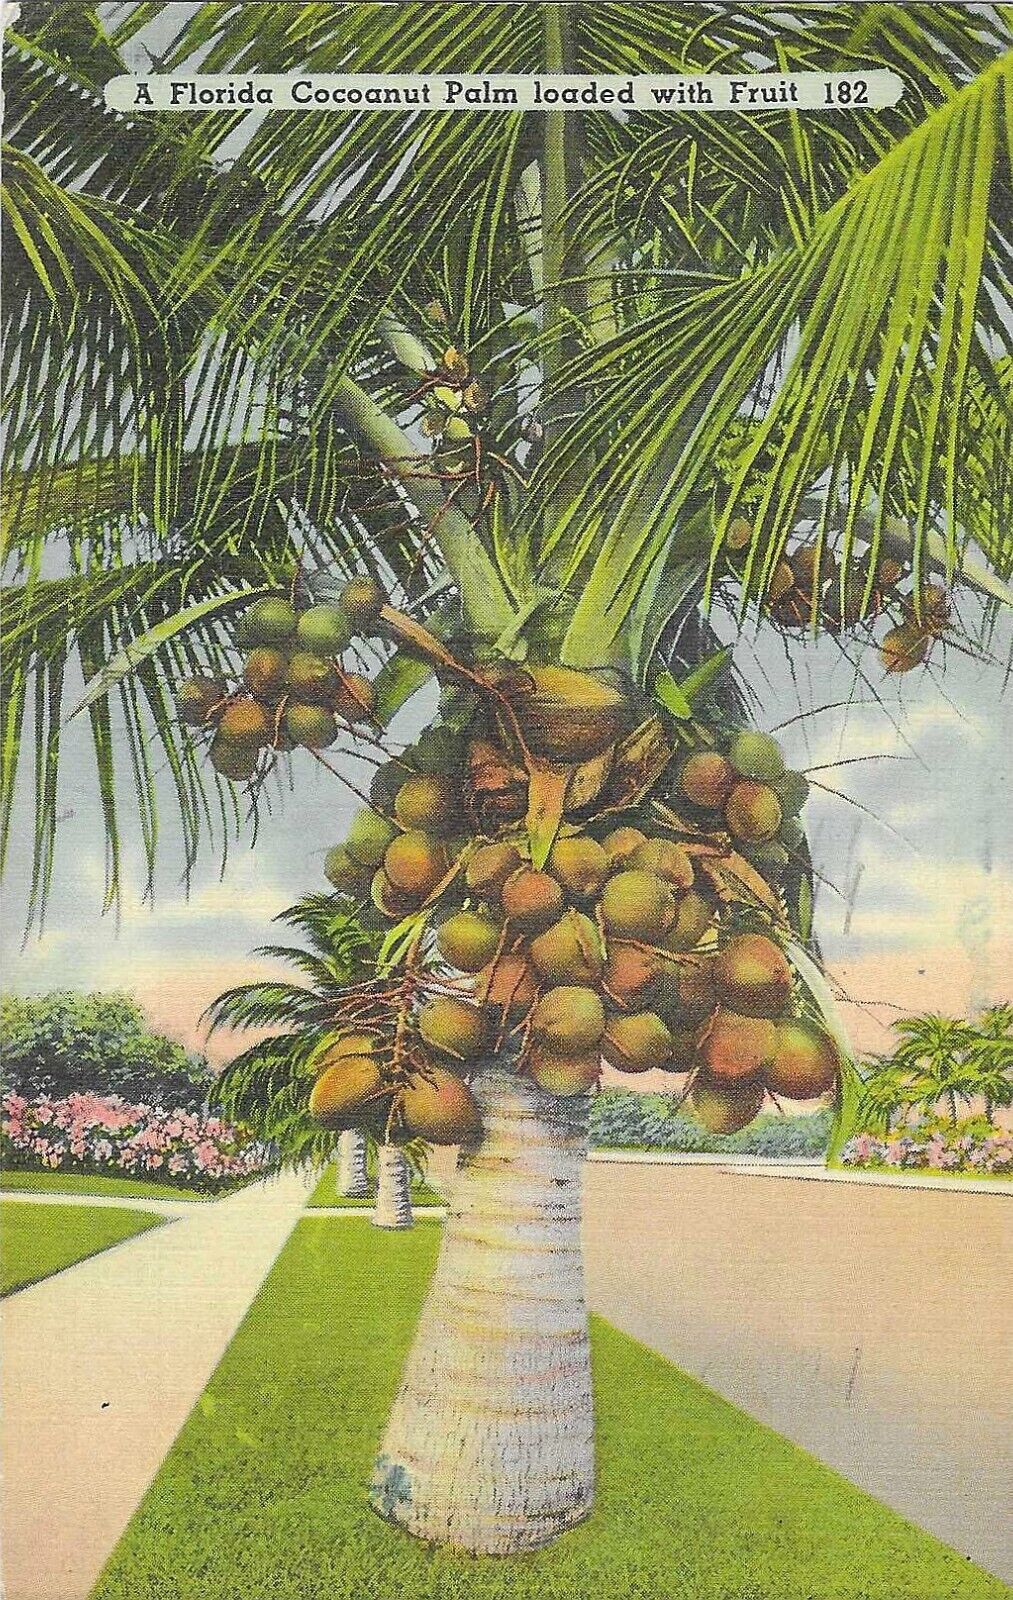 Vintage Florida Linen Postcard Cocoanut  Coconut Palm Loaded with Fruit